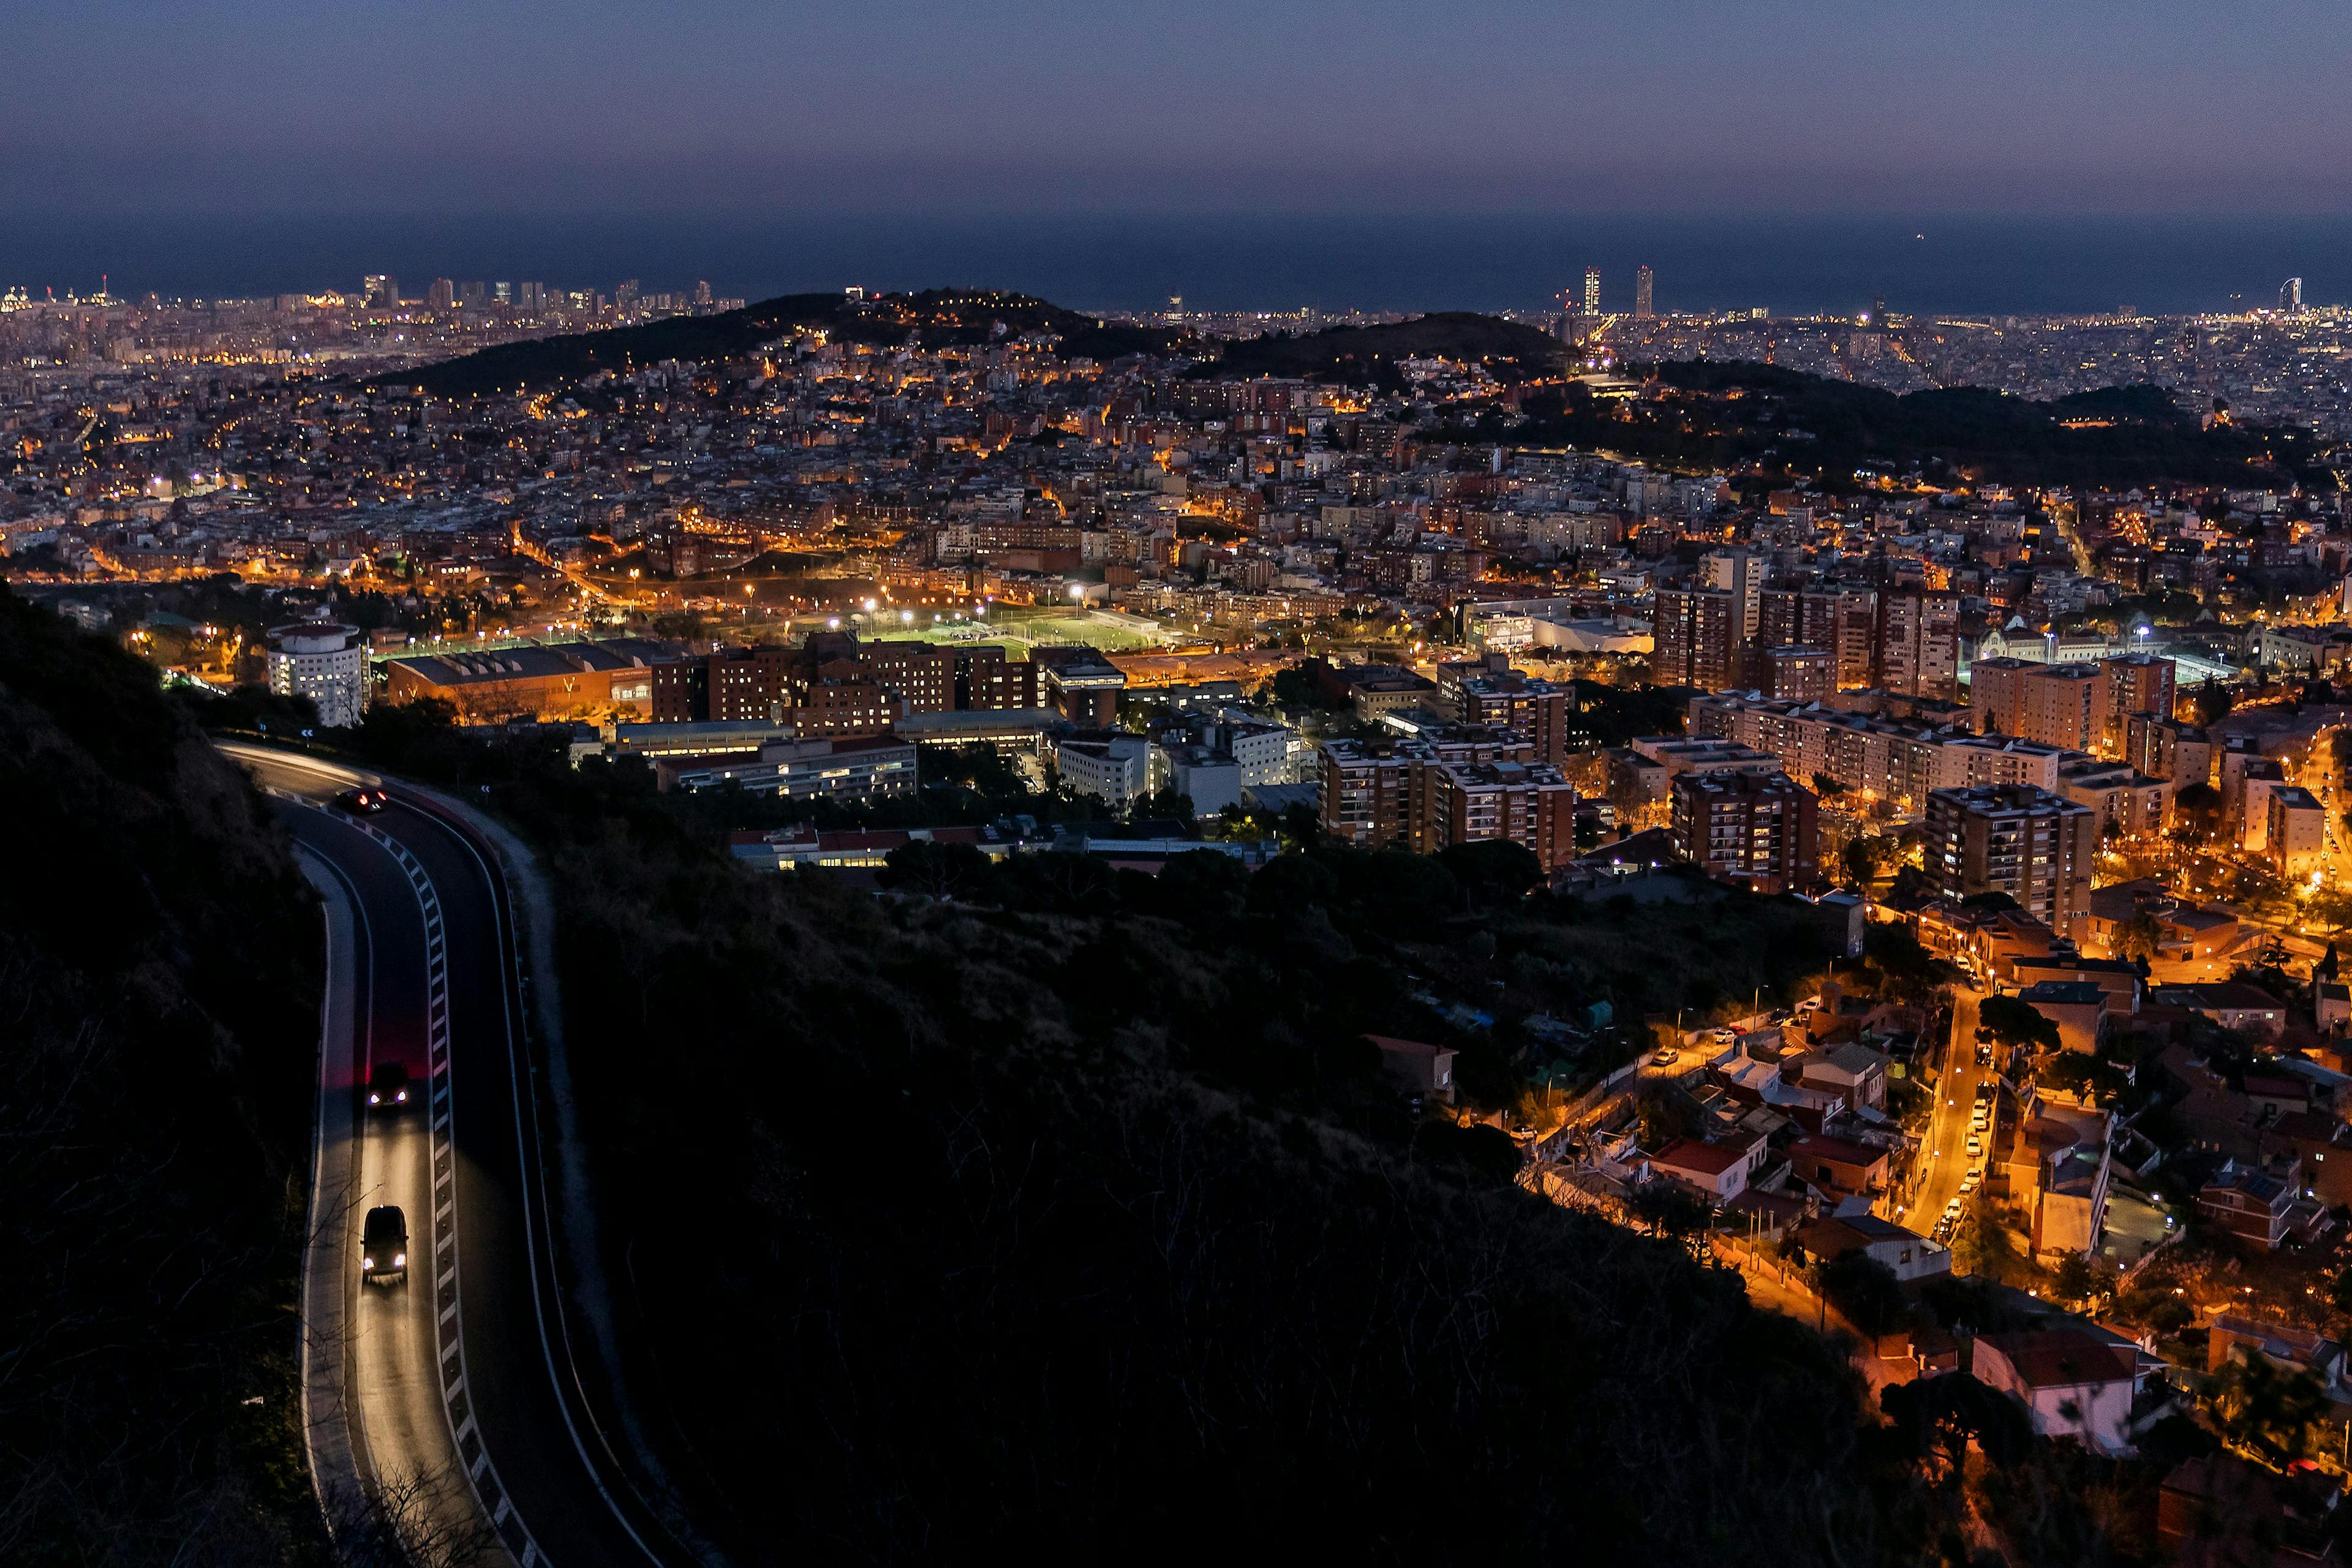 panoramic view of barcelona